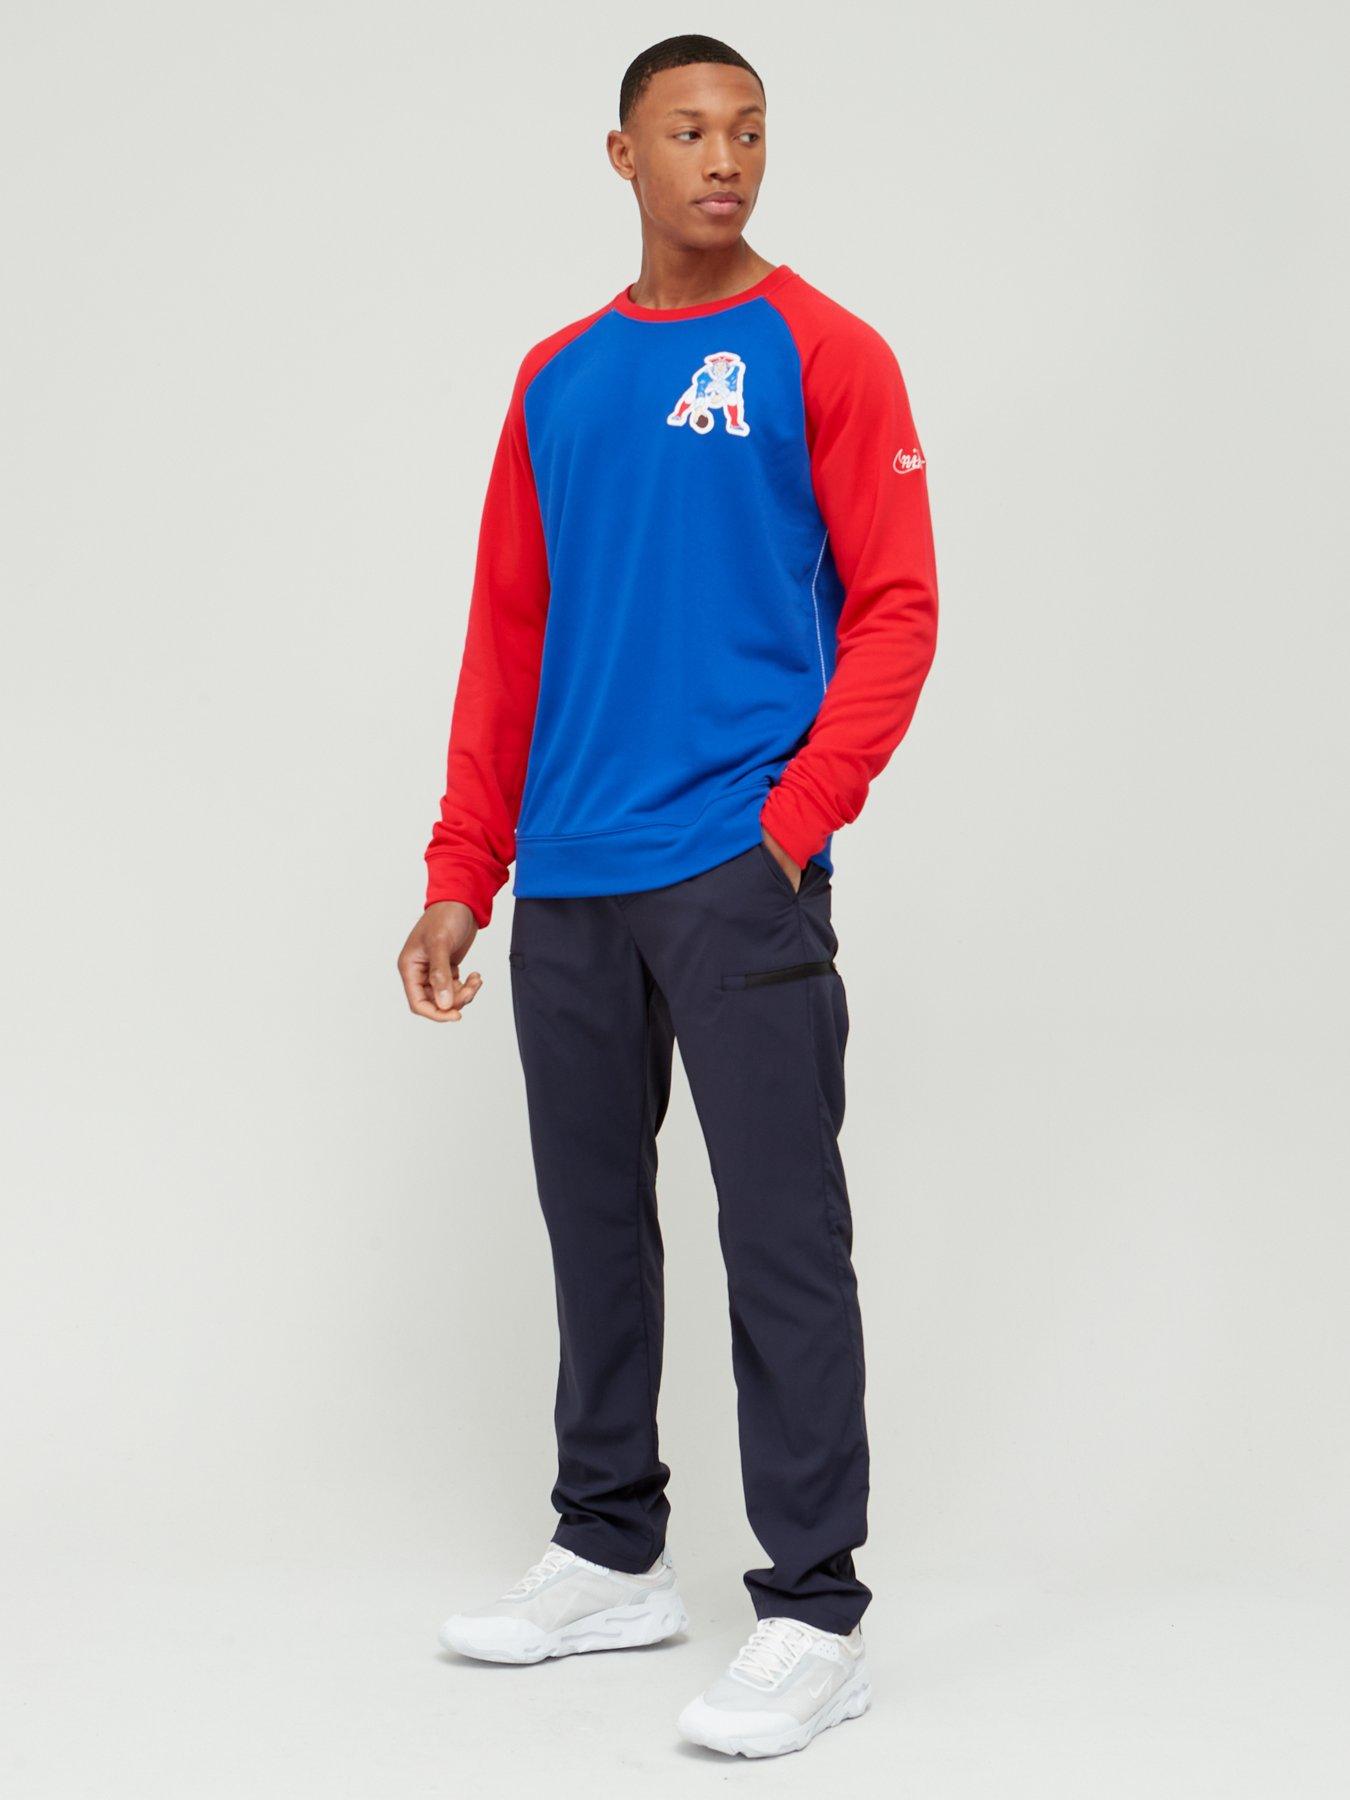  X Nike New England Patriots Sweatshirt - Navy/Red